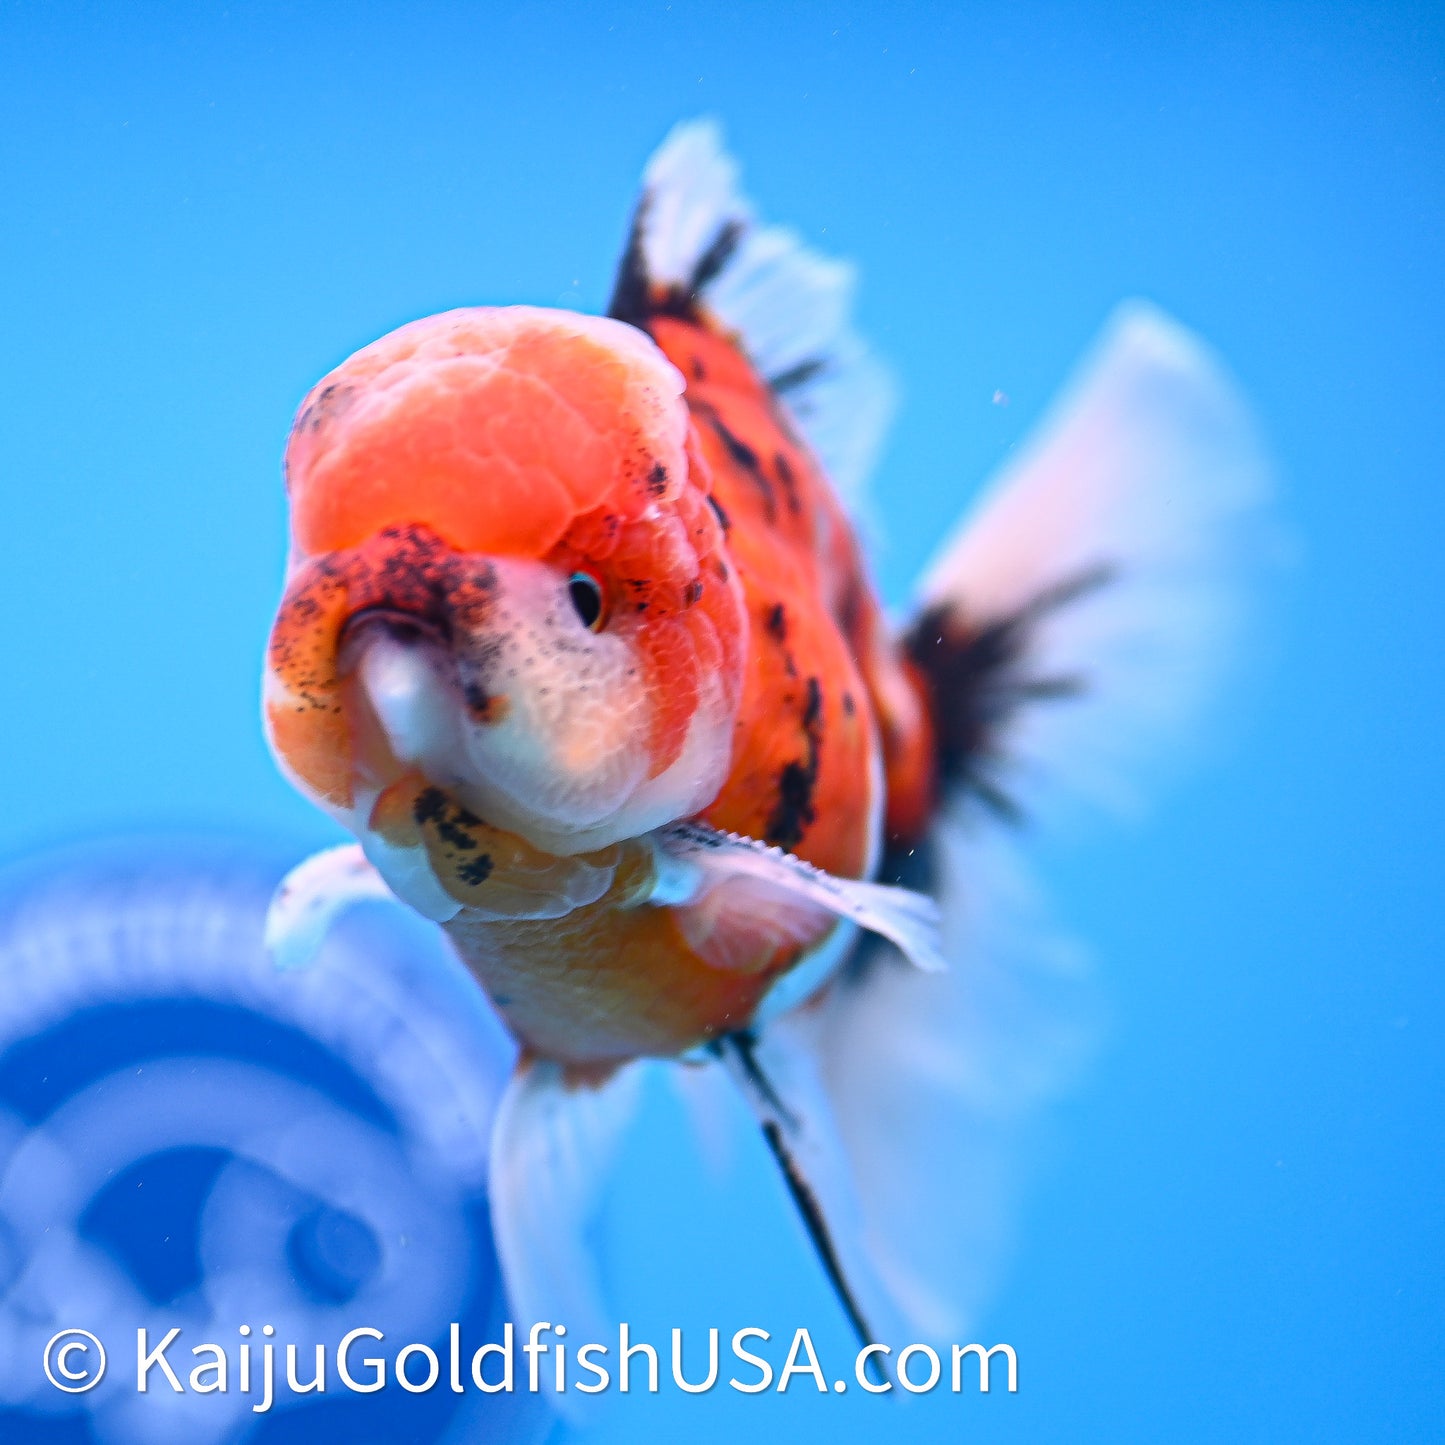 Tricolor Tiger Rose Tail Oranda 3.8in Body (240628_OR07) - Kaiju Goldfish USA